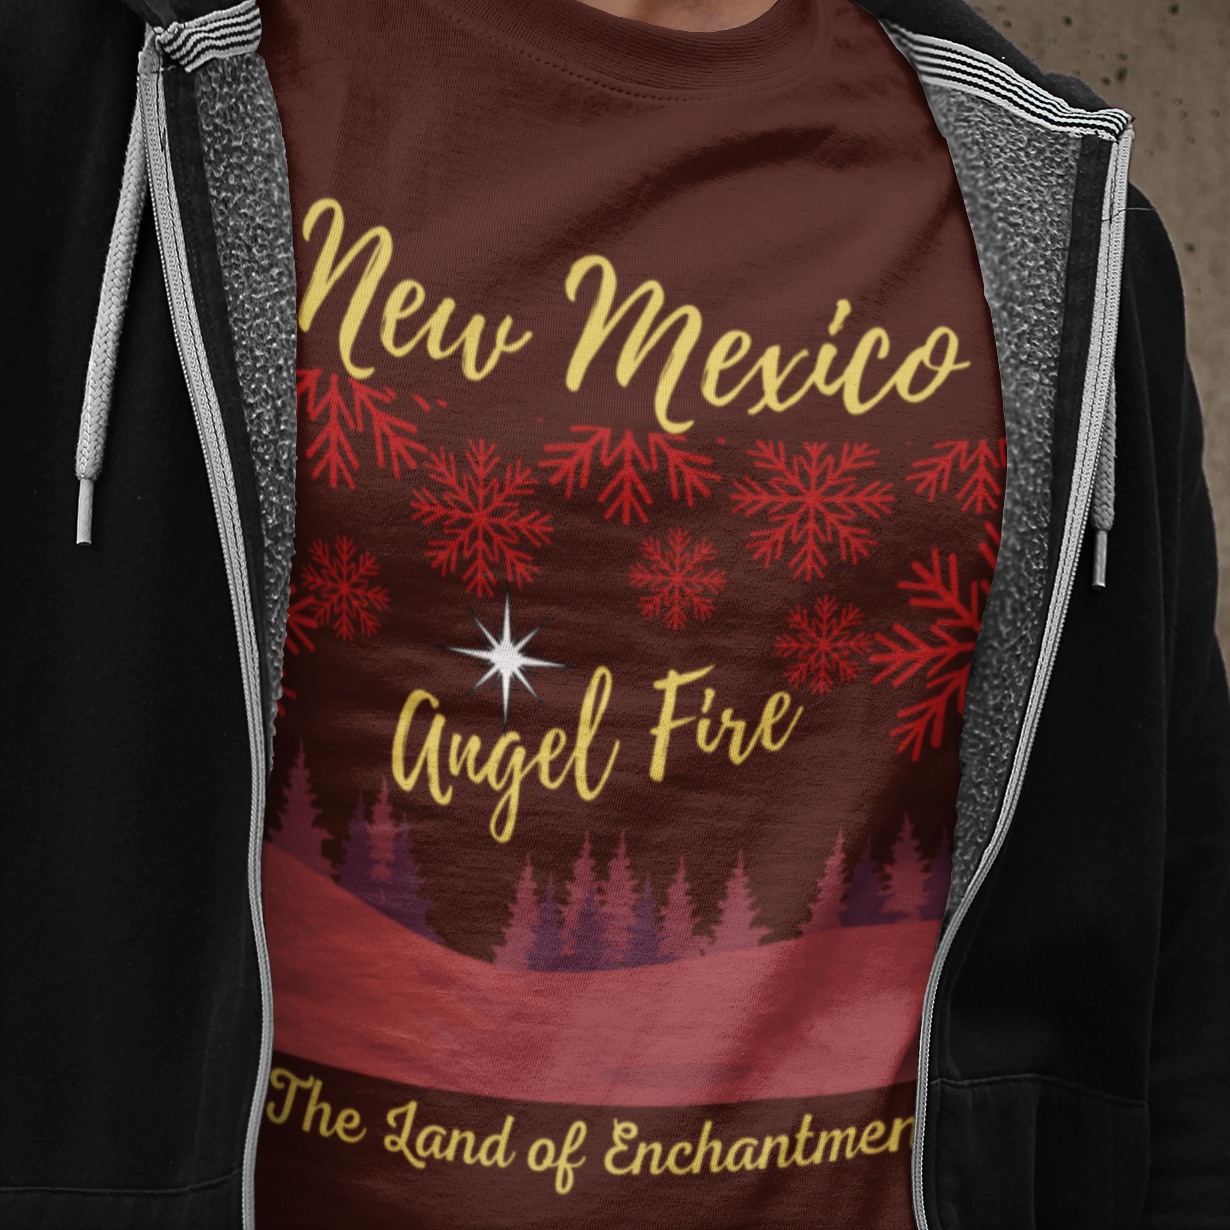 Angel Fire New Mexico t-shirt, NM t-shirt, NM Land of Enchantment, Angel Fire ski resort NM